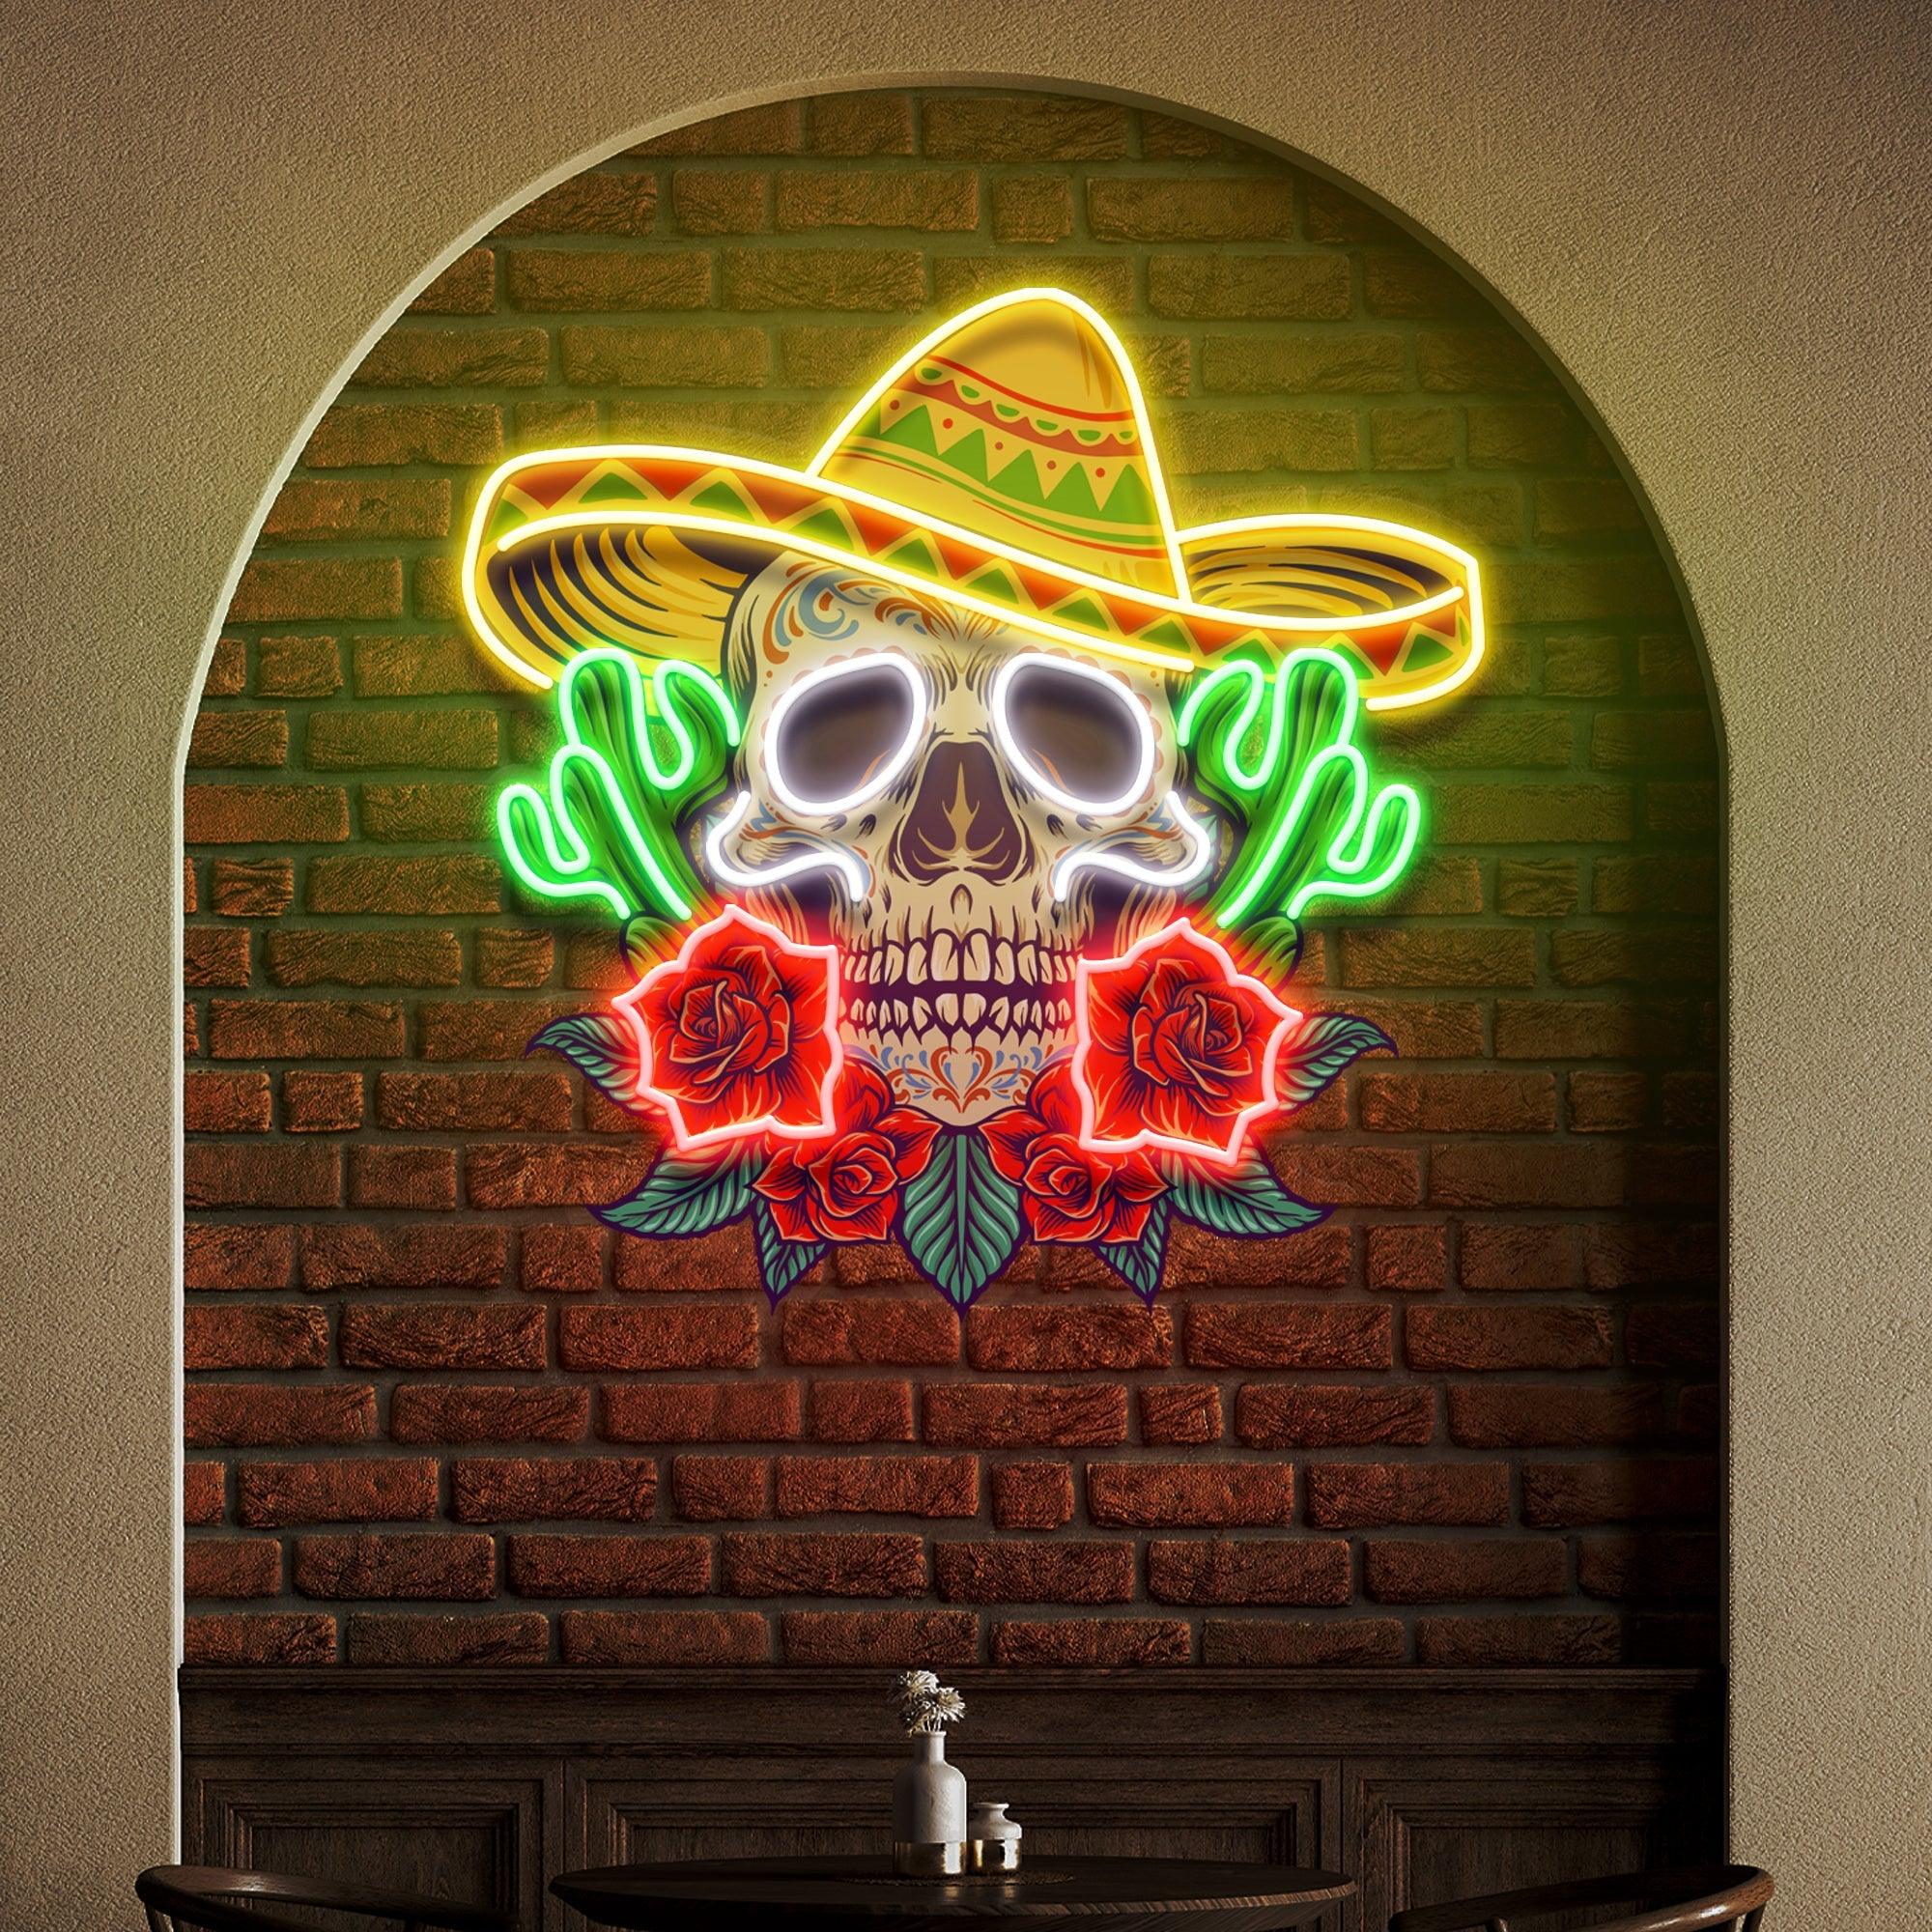 Custom Name Mexican Food Restaurants Decor Artwork - Neonbir